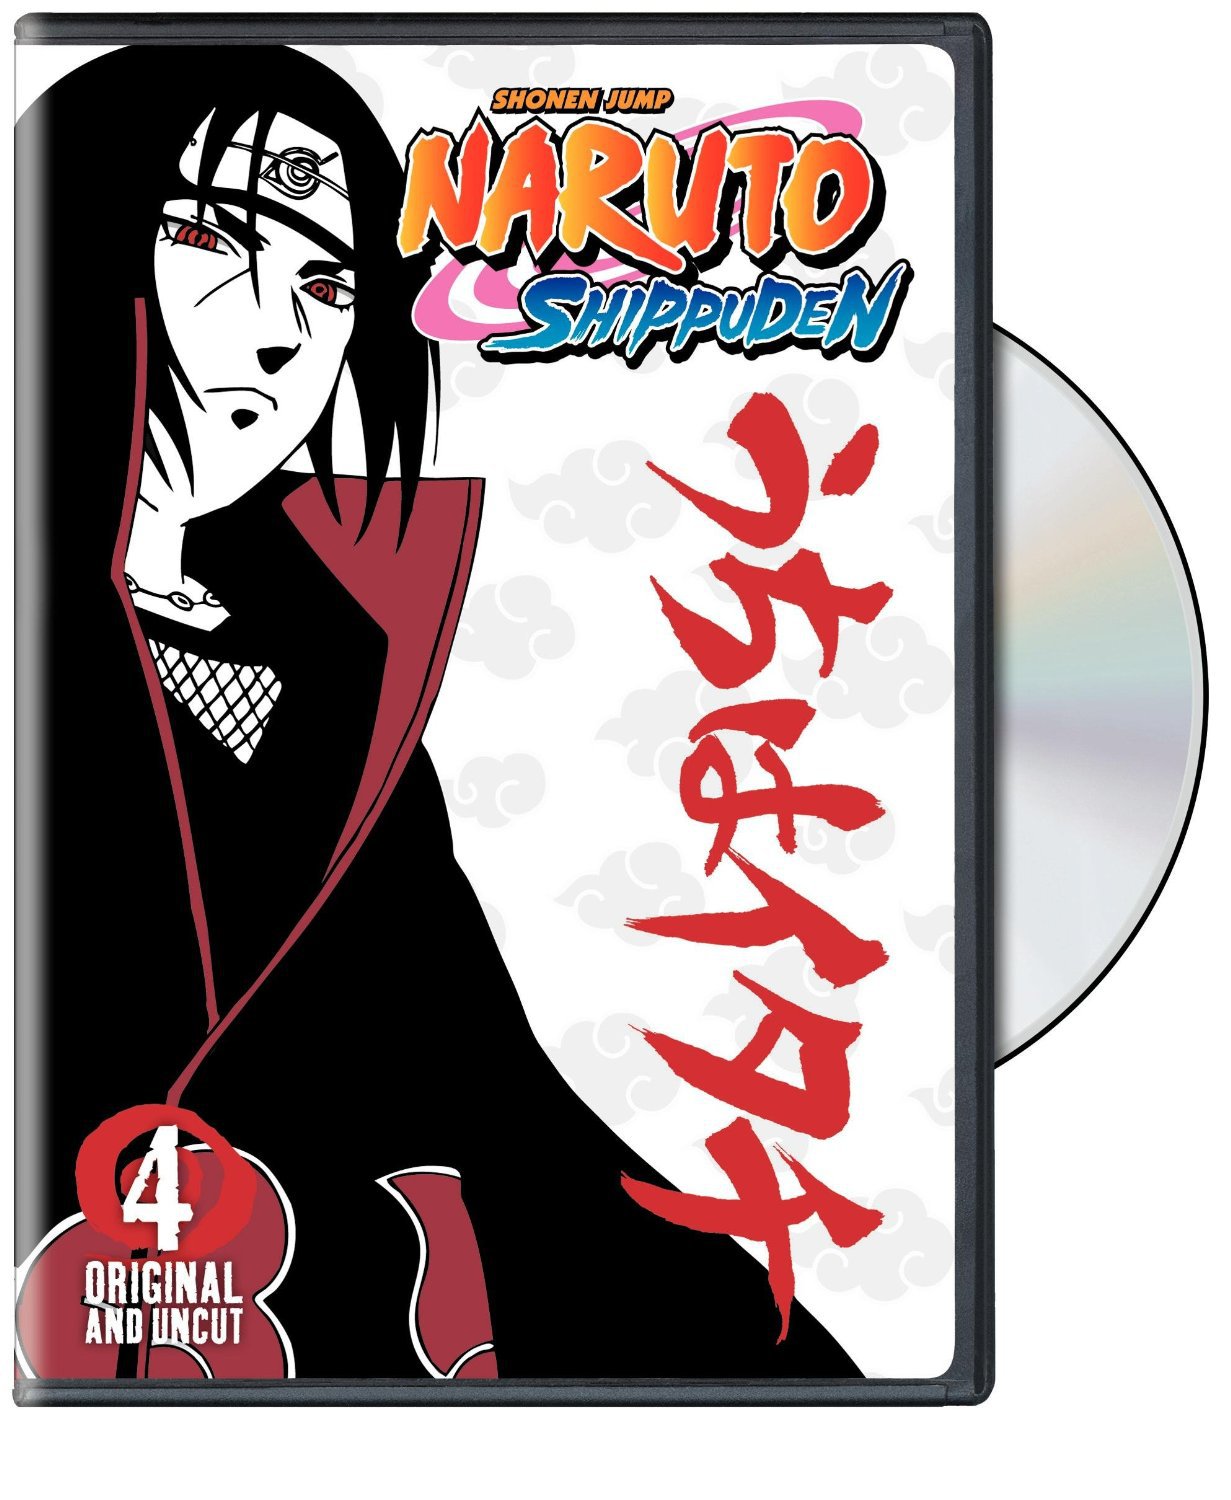 Naruto Shippuden Volume 4